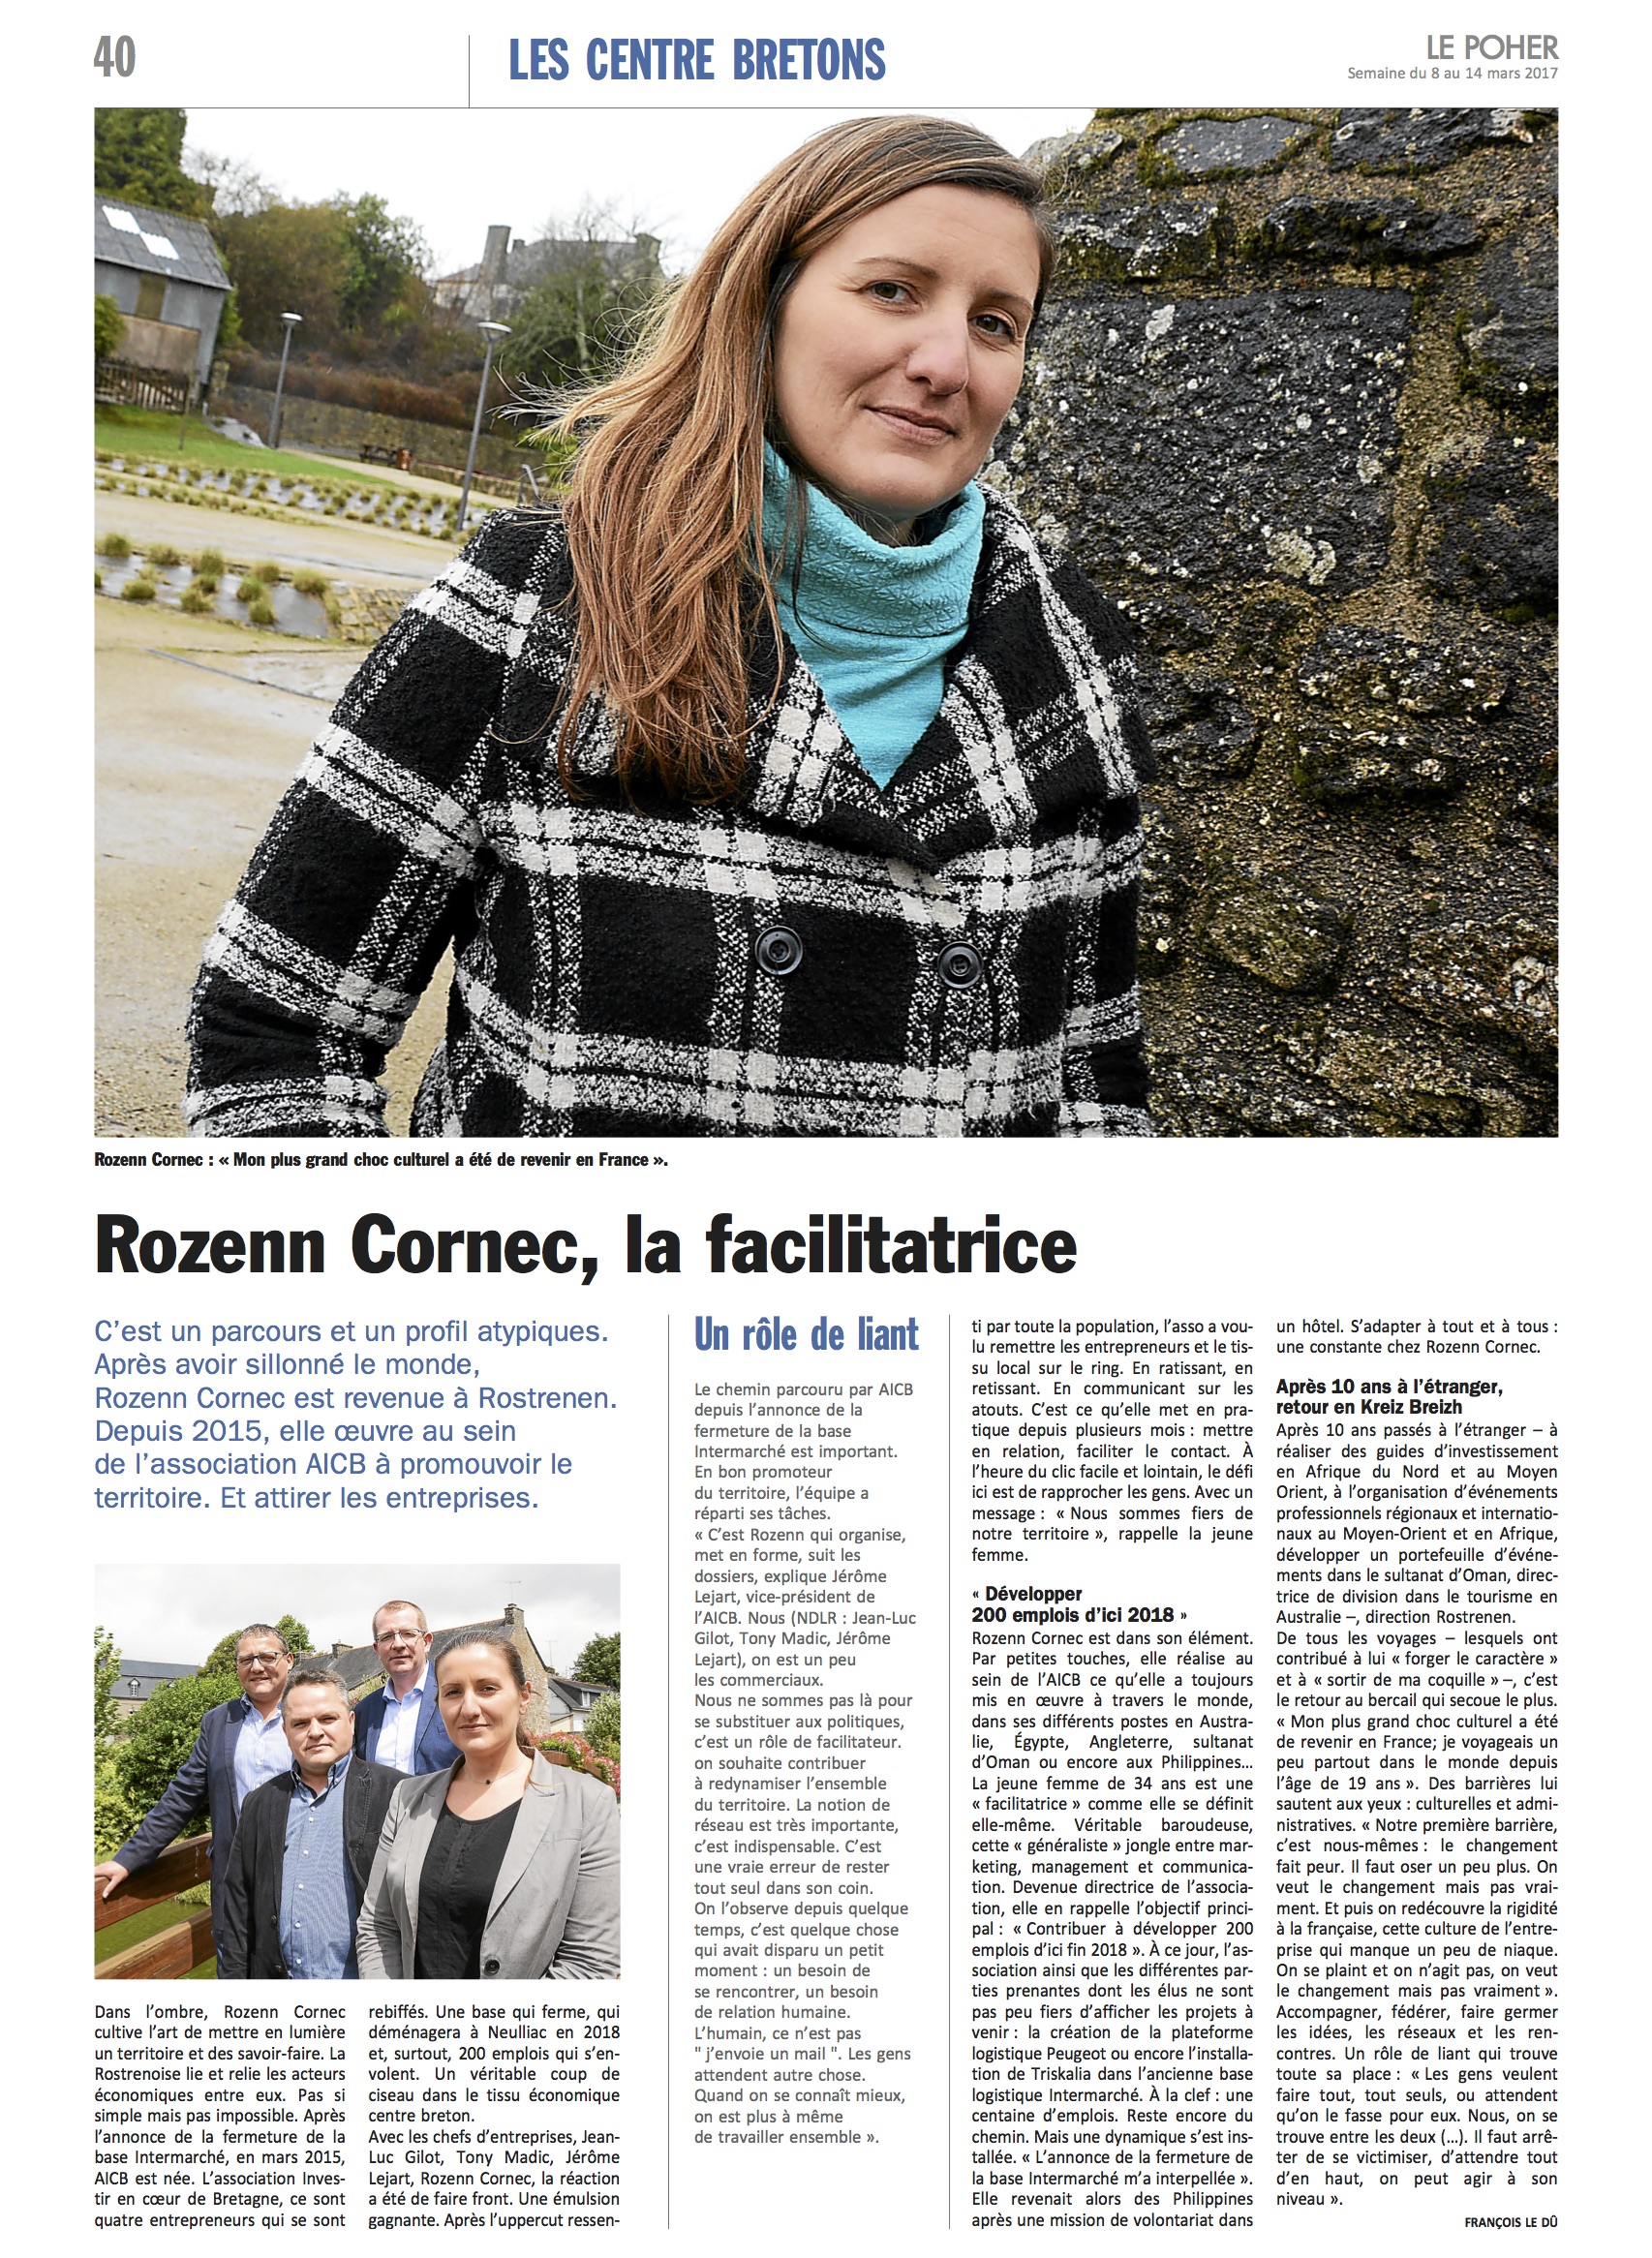 Communiqué de presse - Rozenn Cornec, la facilitatrice - Le Poher